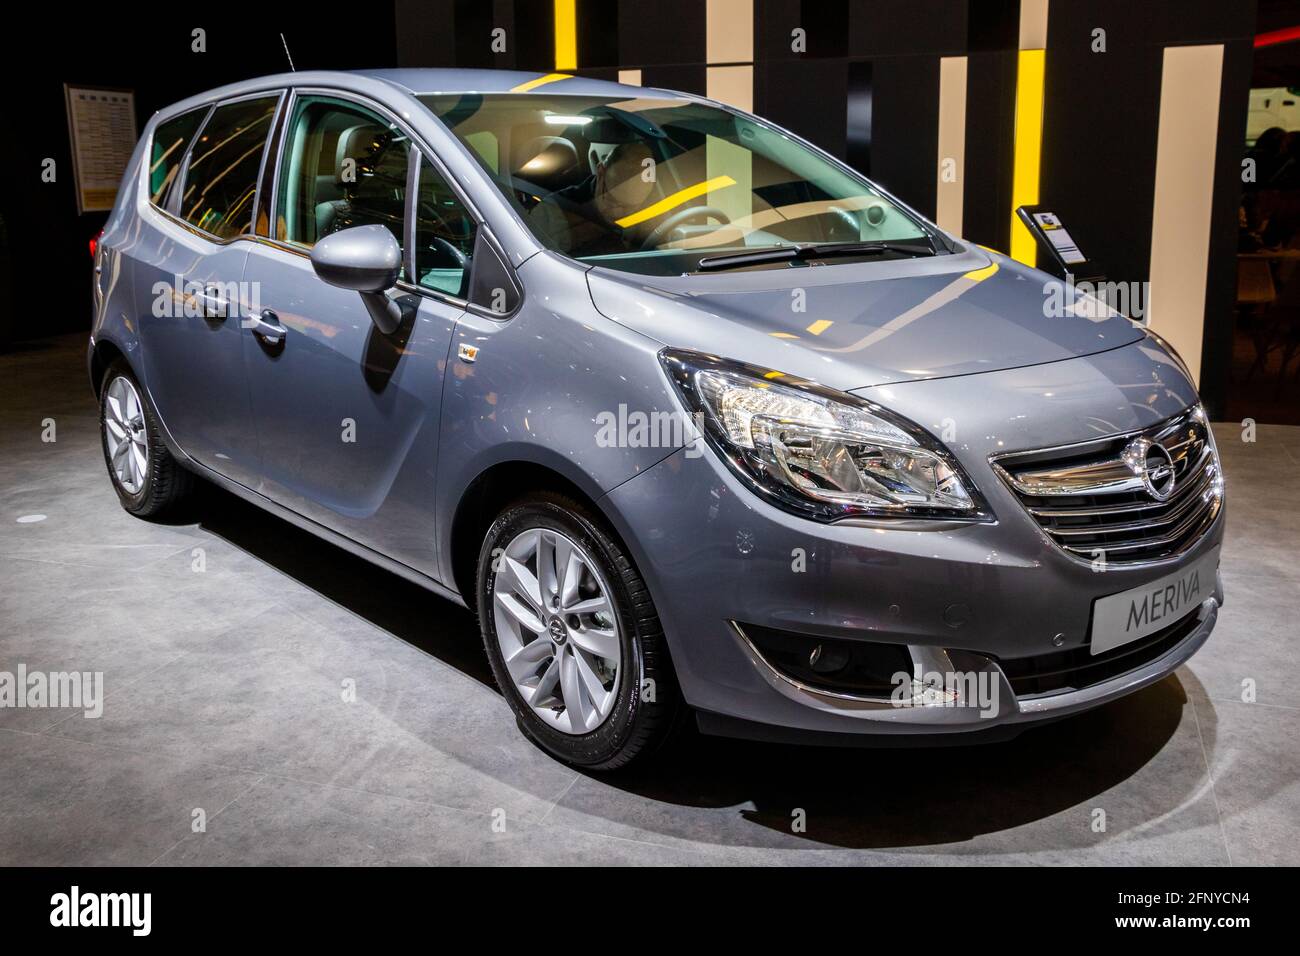 57 fotos e imágenes de Opel Meriva - Getty Images